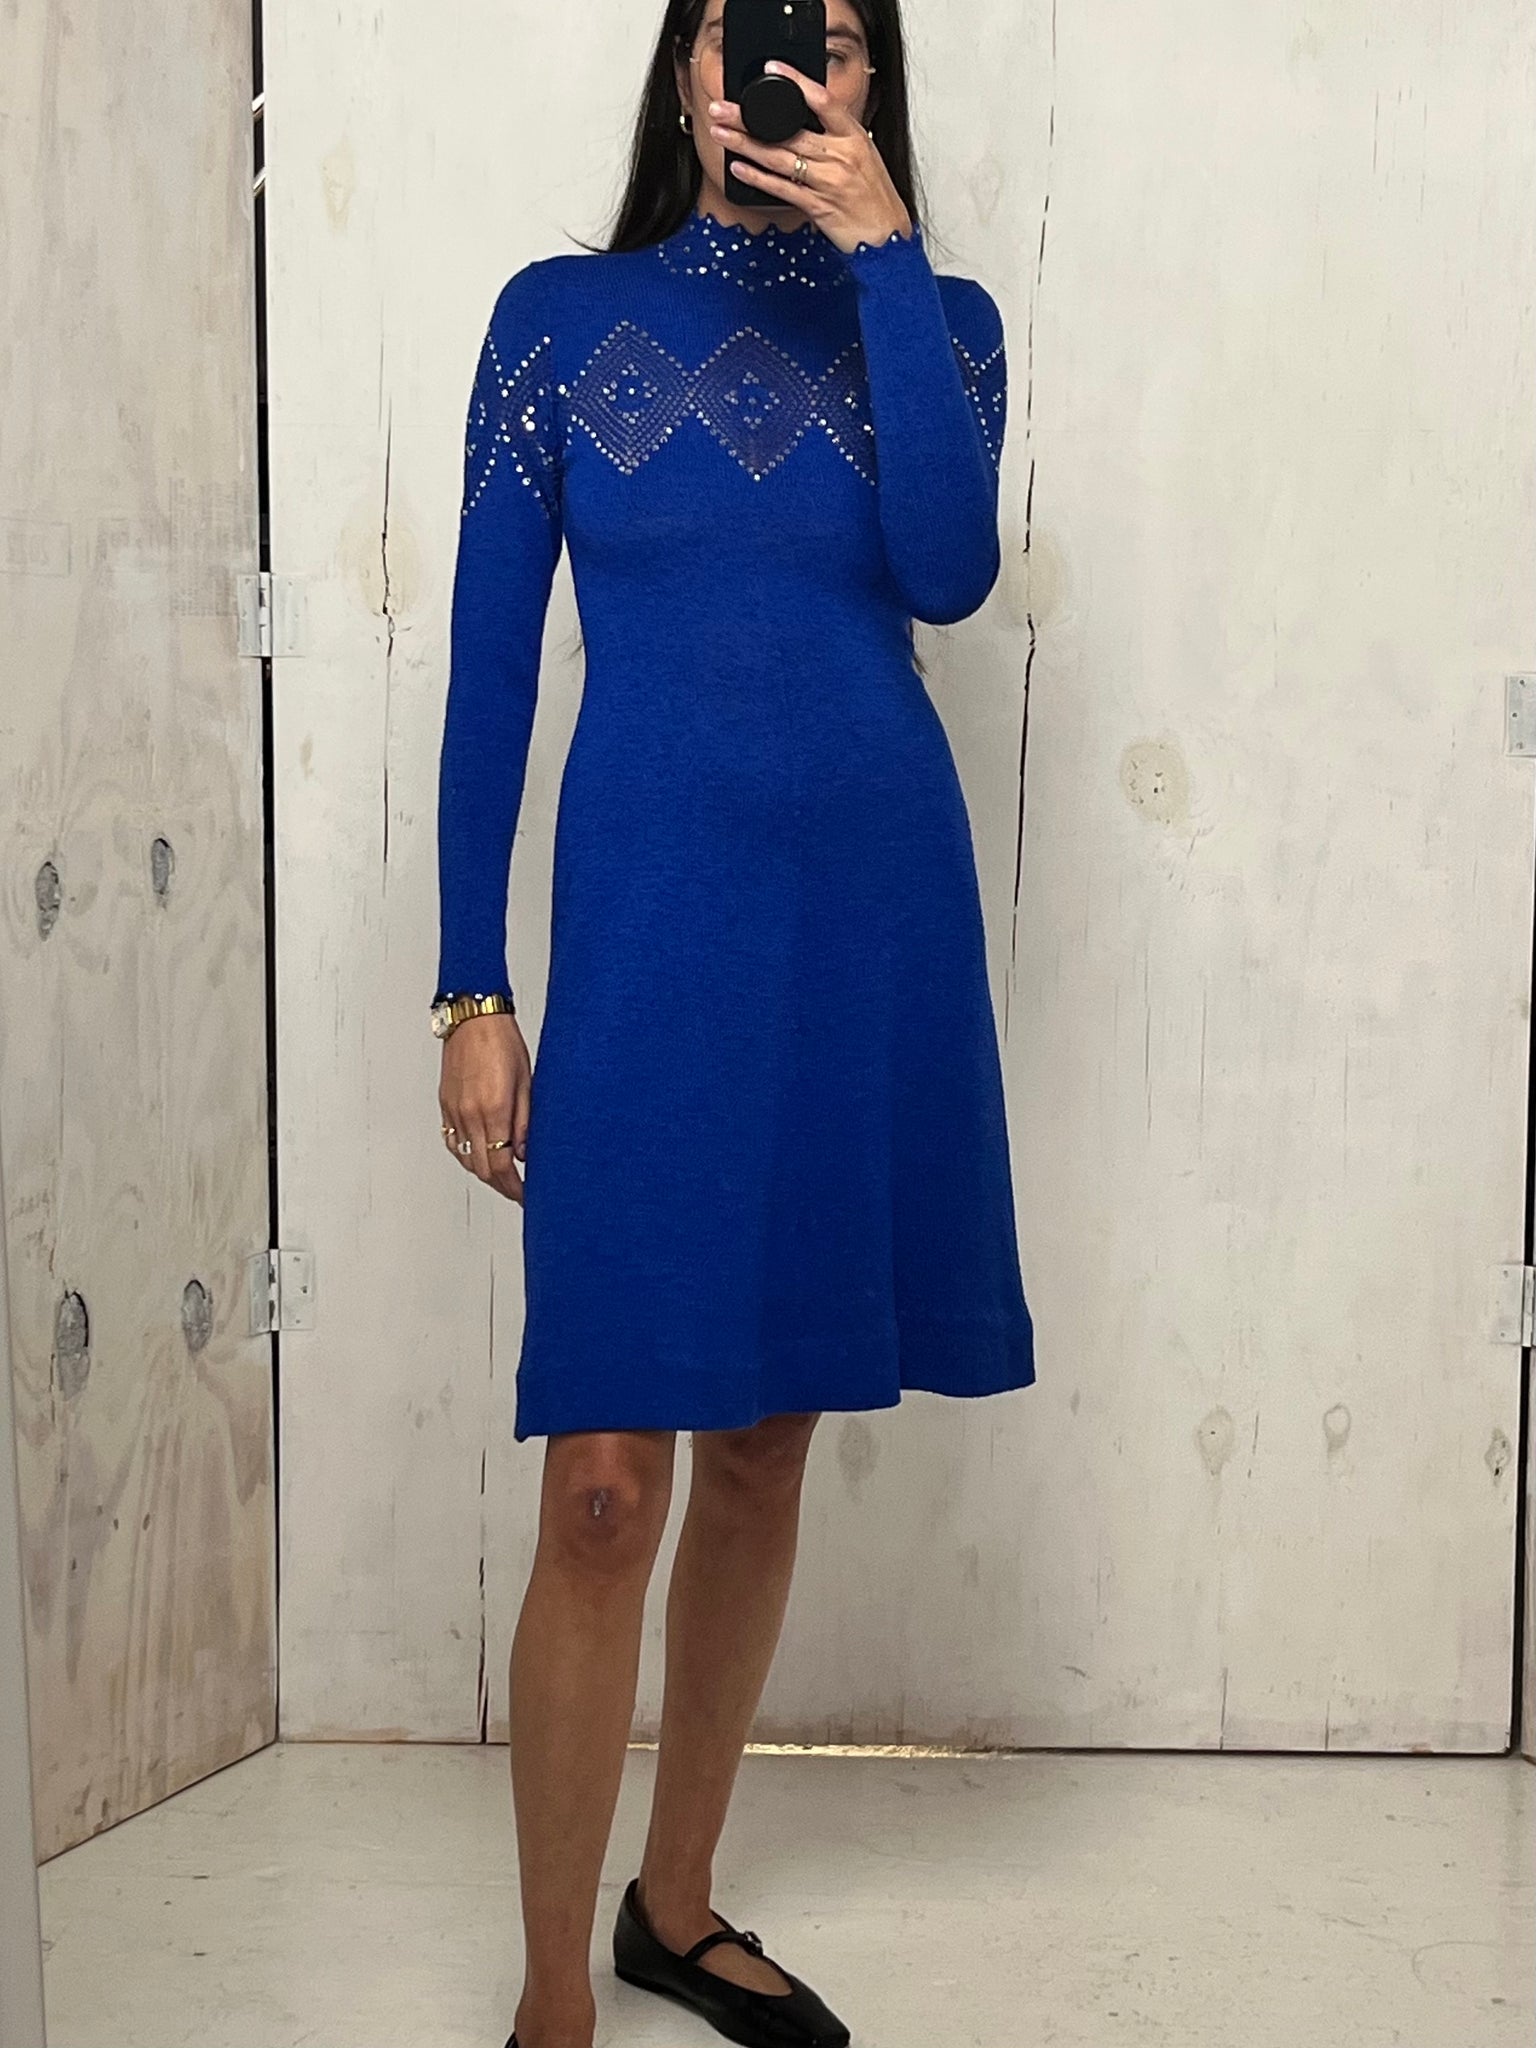 Electric Blue Rhinestone Midi Knit Dress with Diamond Details